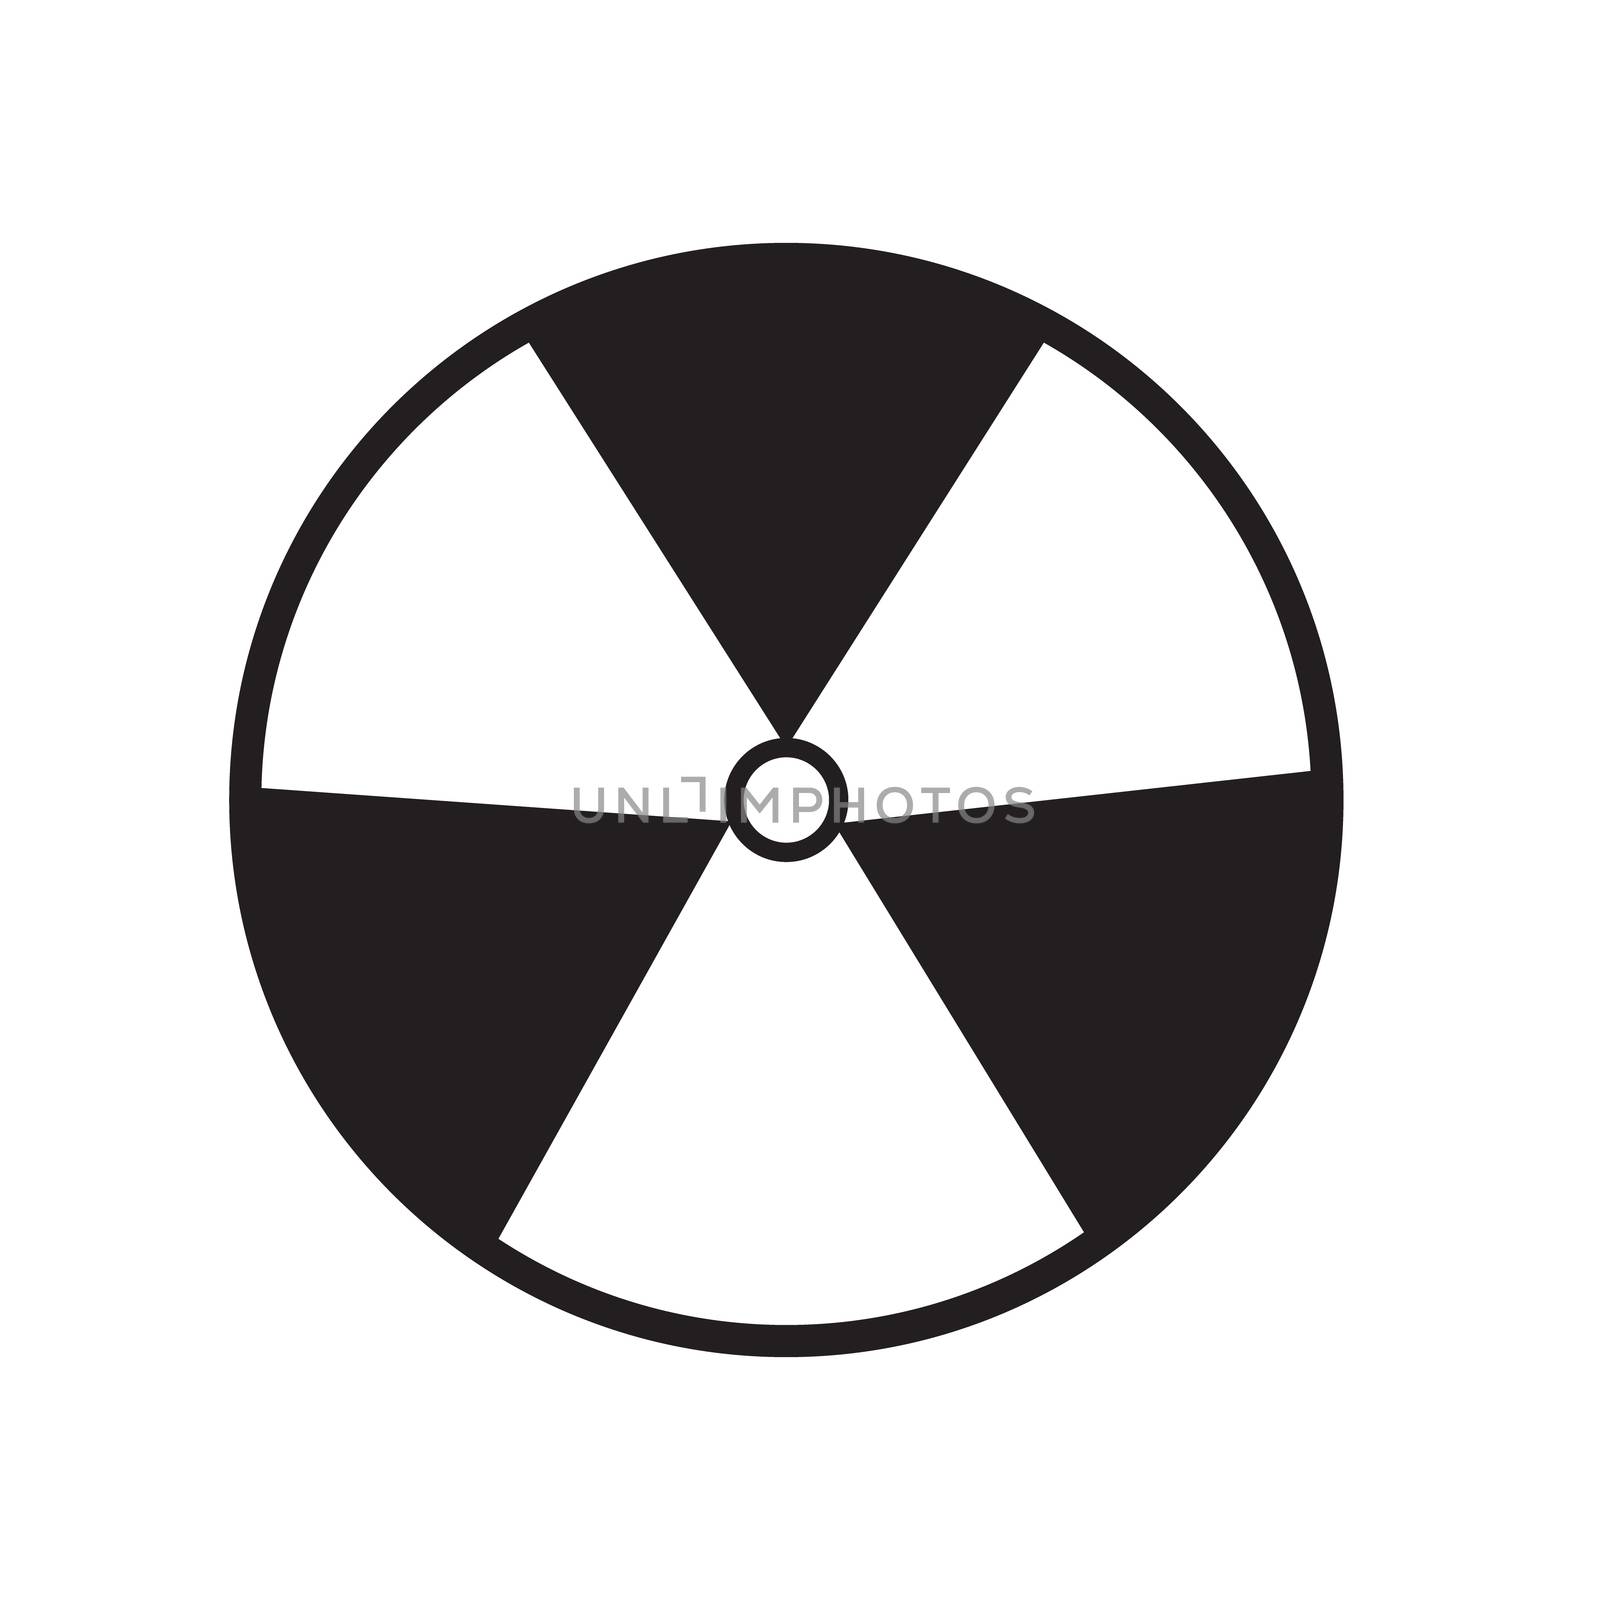 radiation symbol of activity on white background. radiation symbol of activity sign.